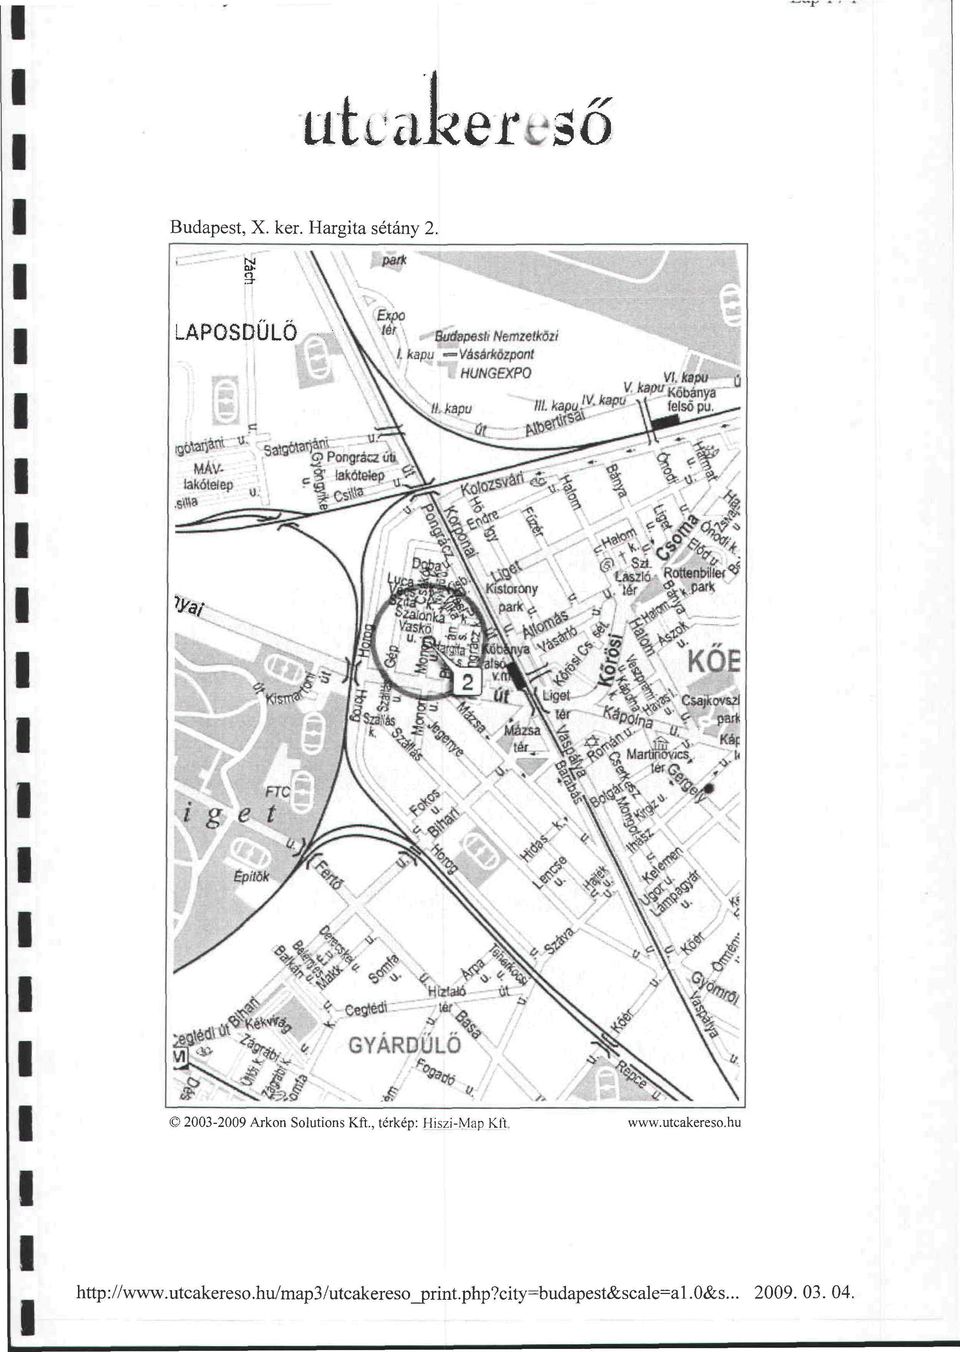 , térkép: Hiszi-Map Kft, www.utcakereso.hu http://www.